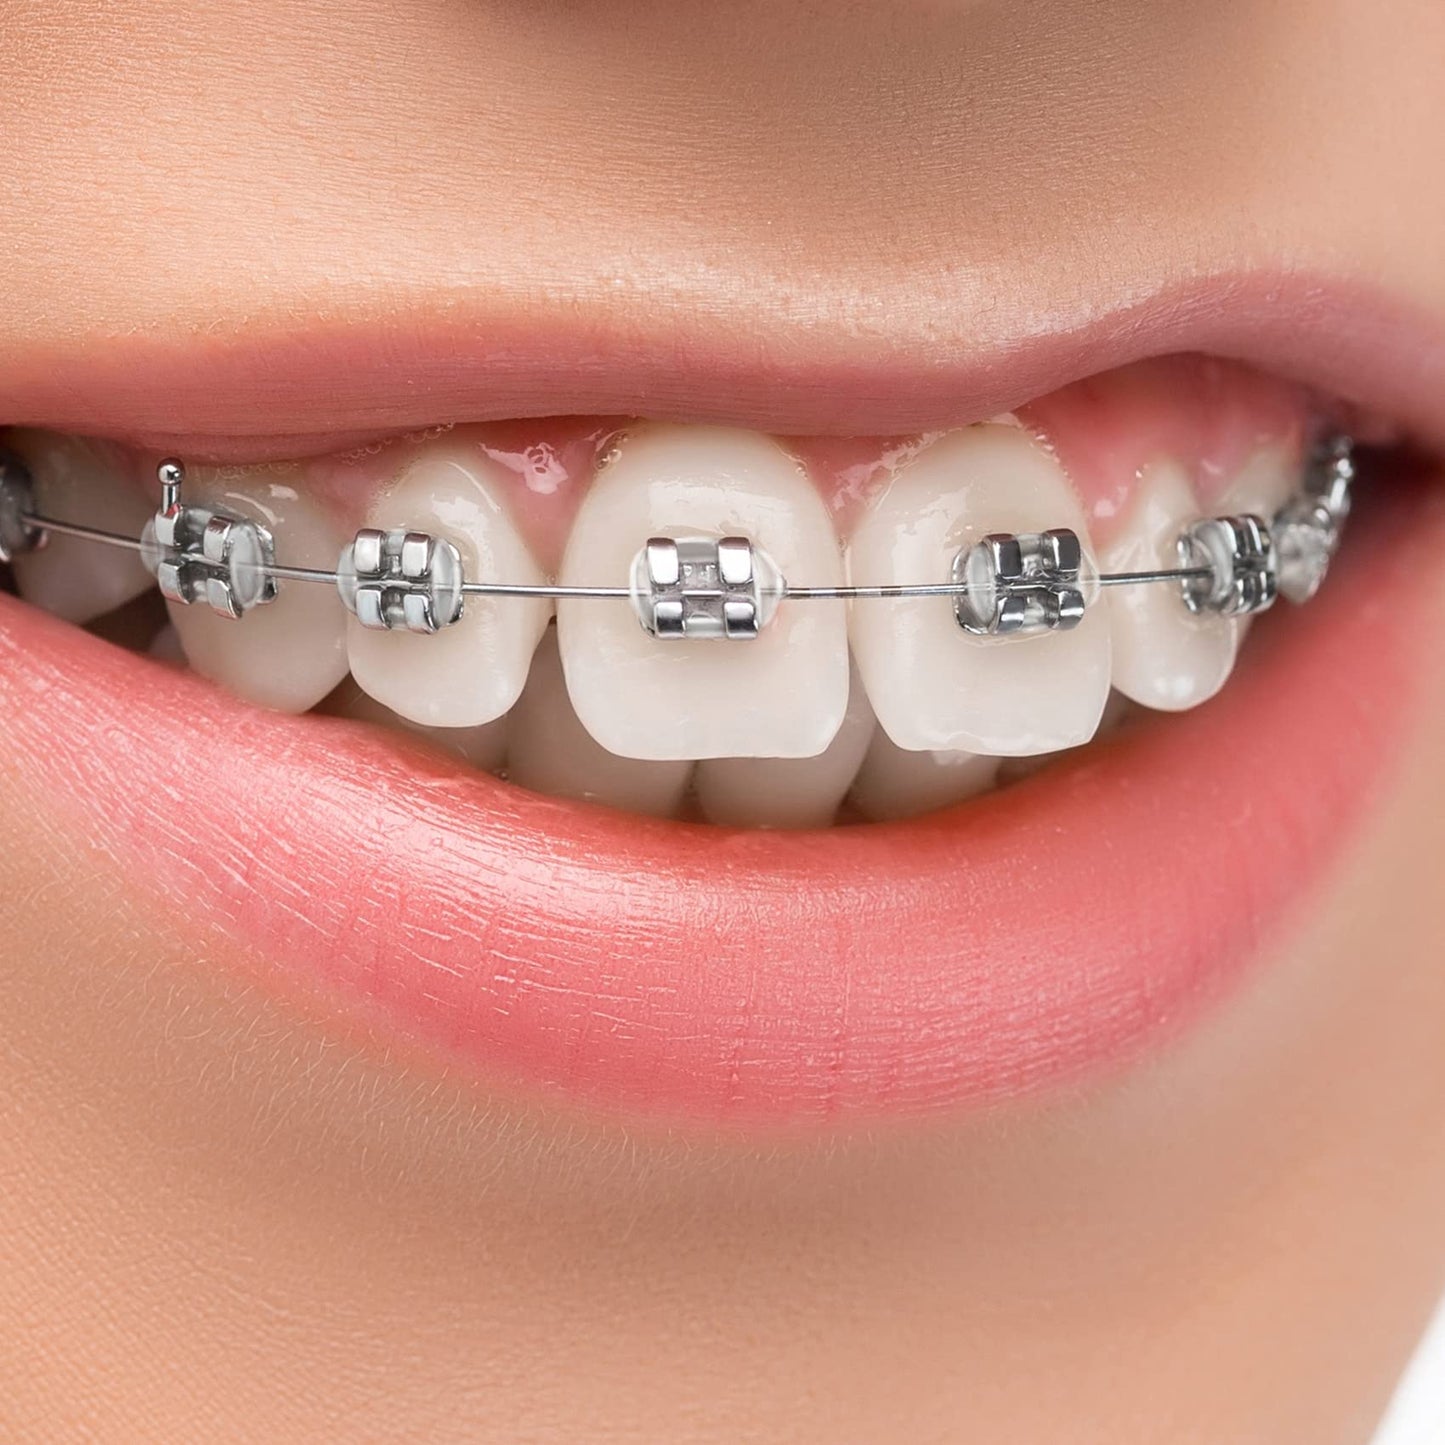 Dental Orthodontic Ligature Ties Braces 1040 Pcs, Ortho Braces Color Bands Ligature Ties Elastomeric O-Rings for Braces